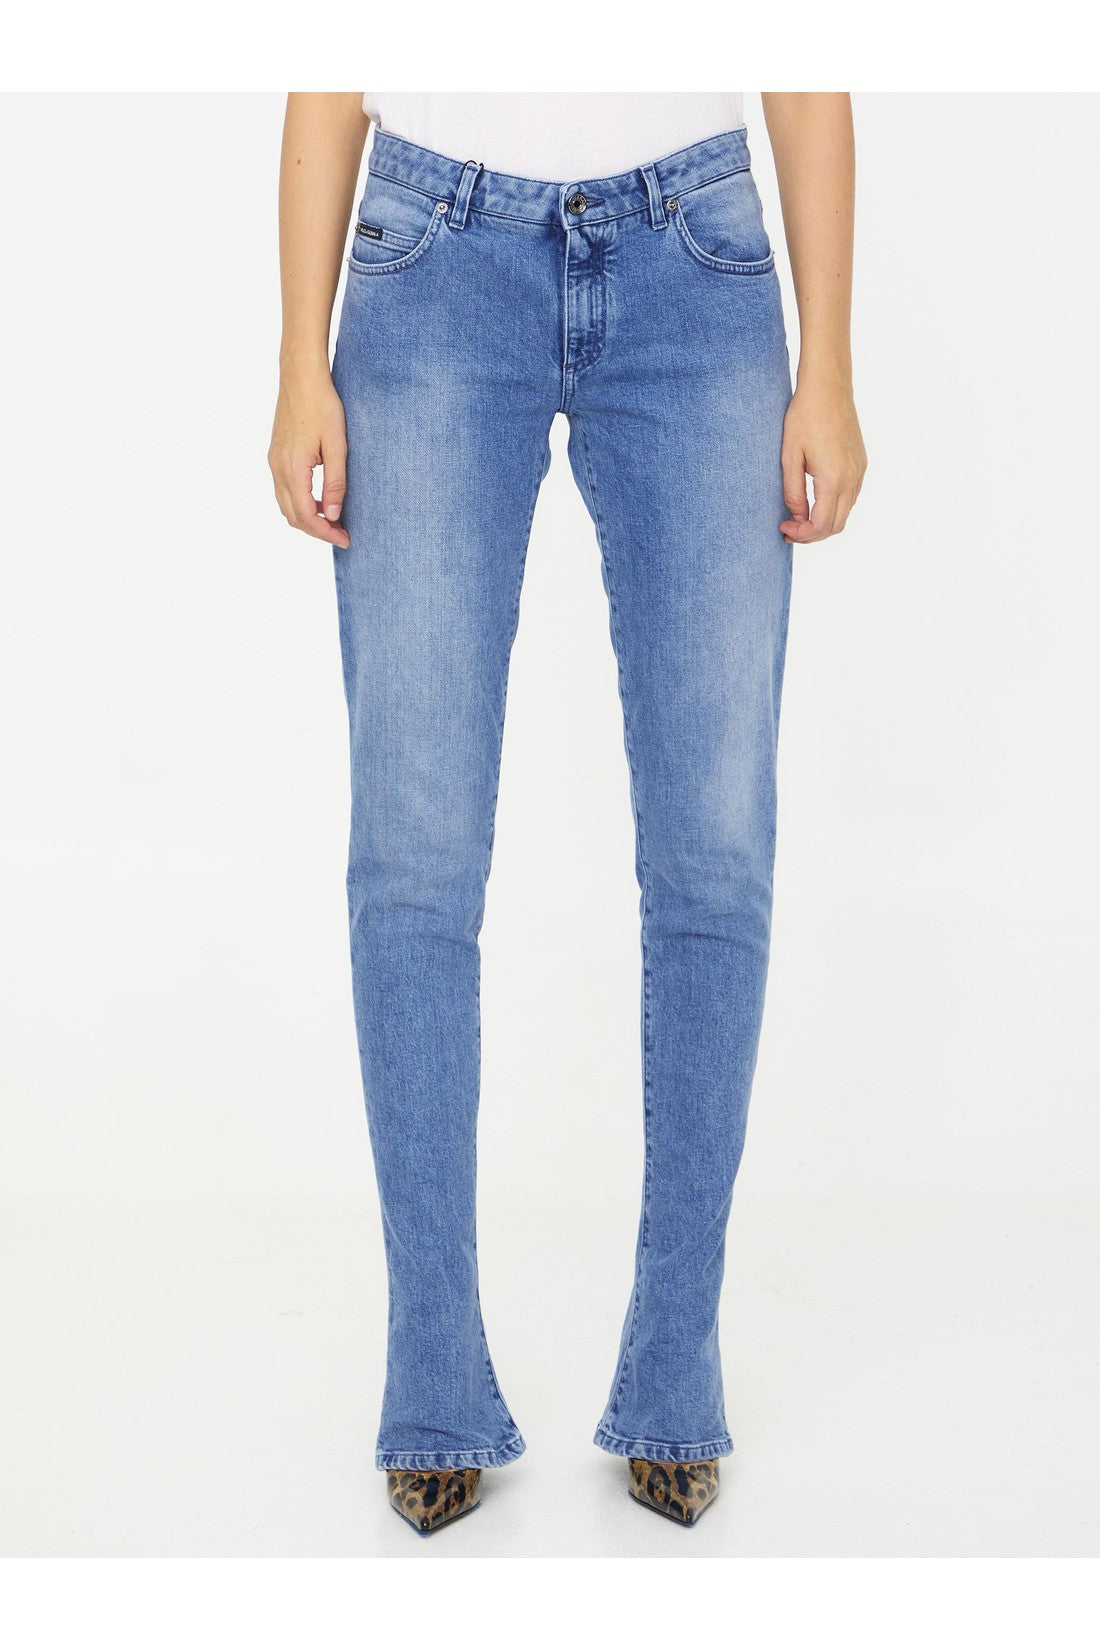 Light-blue denim jeans